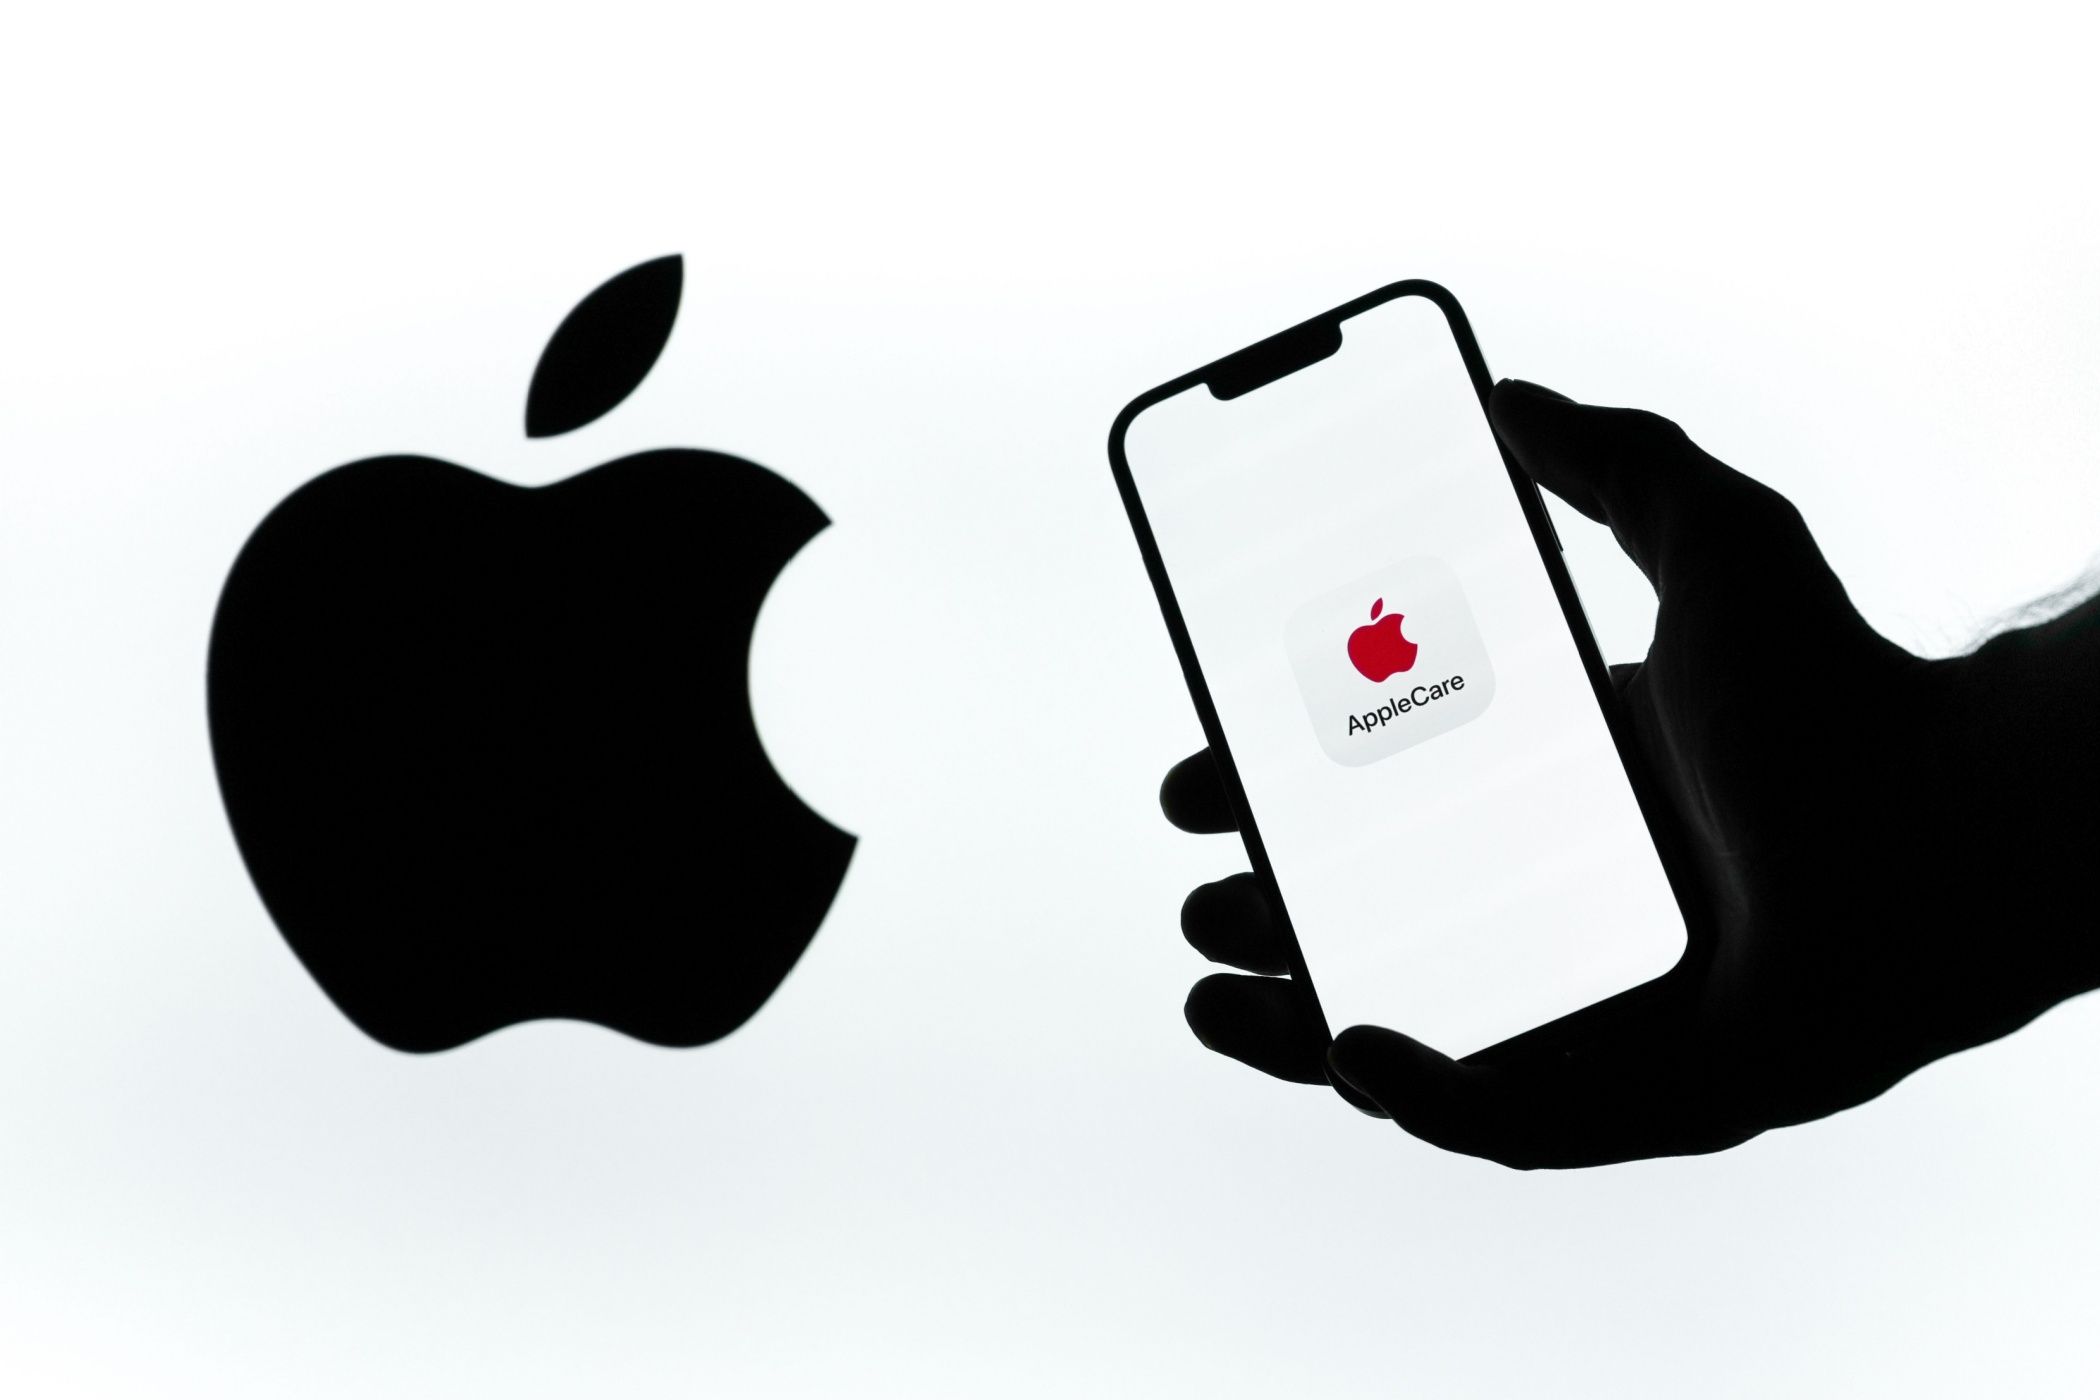 AppleCare Logo on phone, next to Apple logo